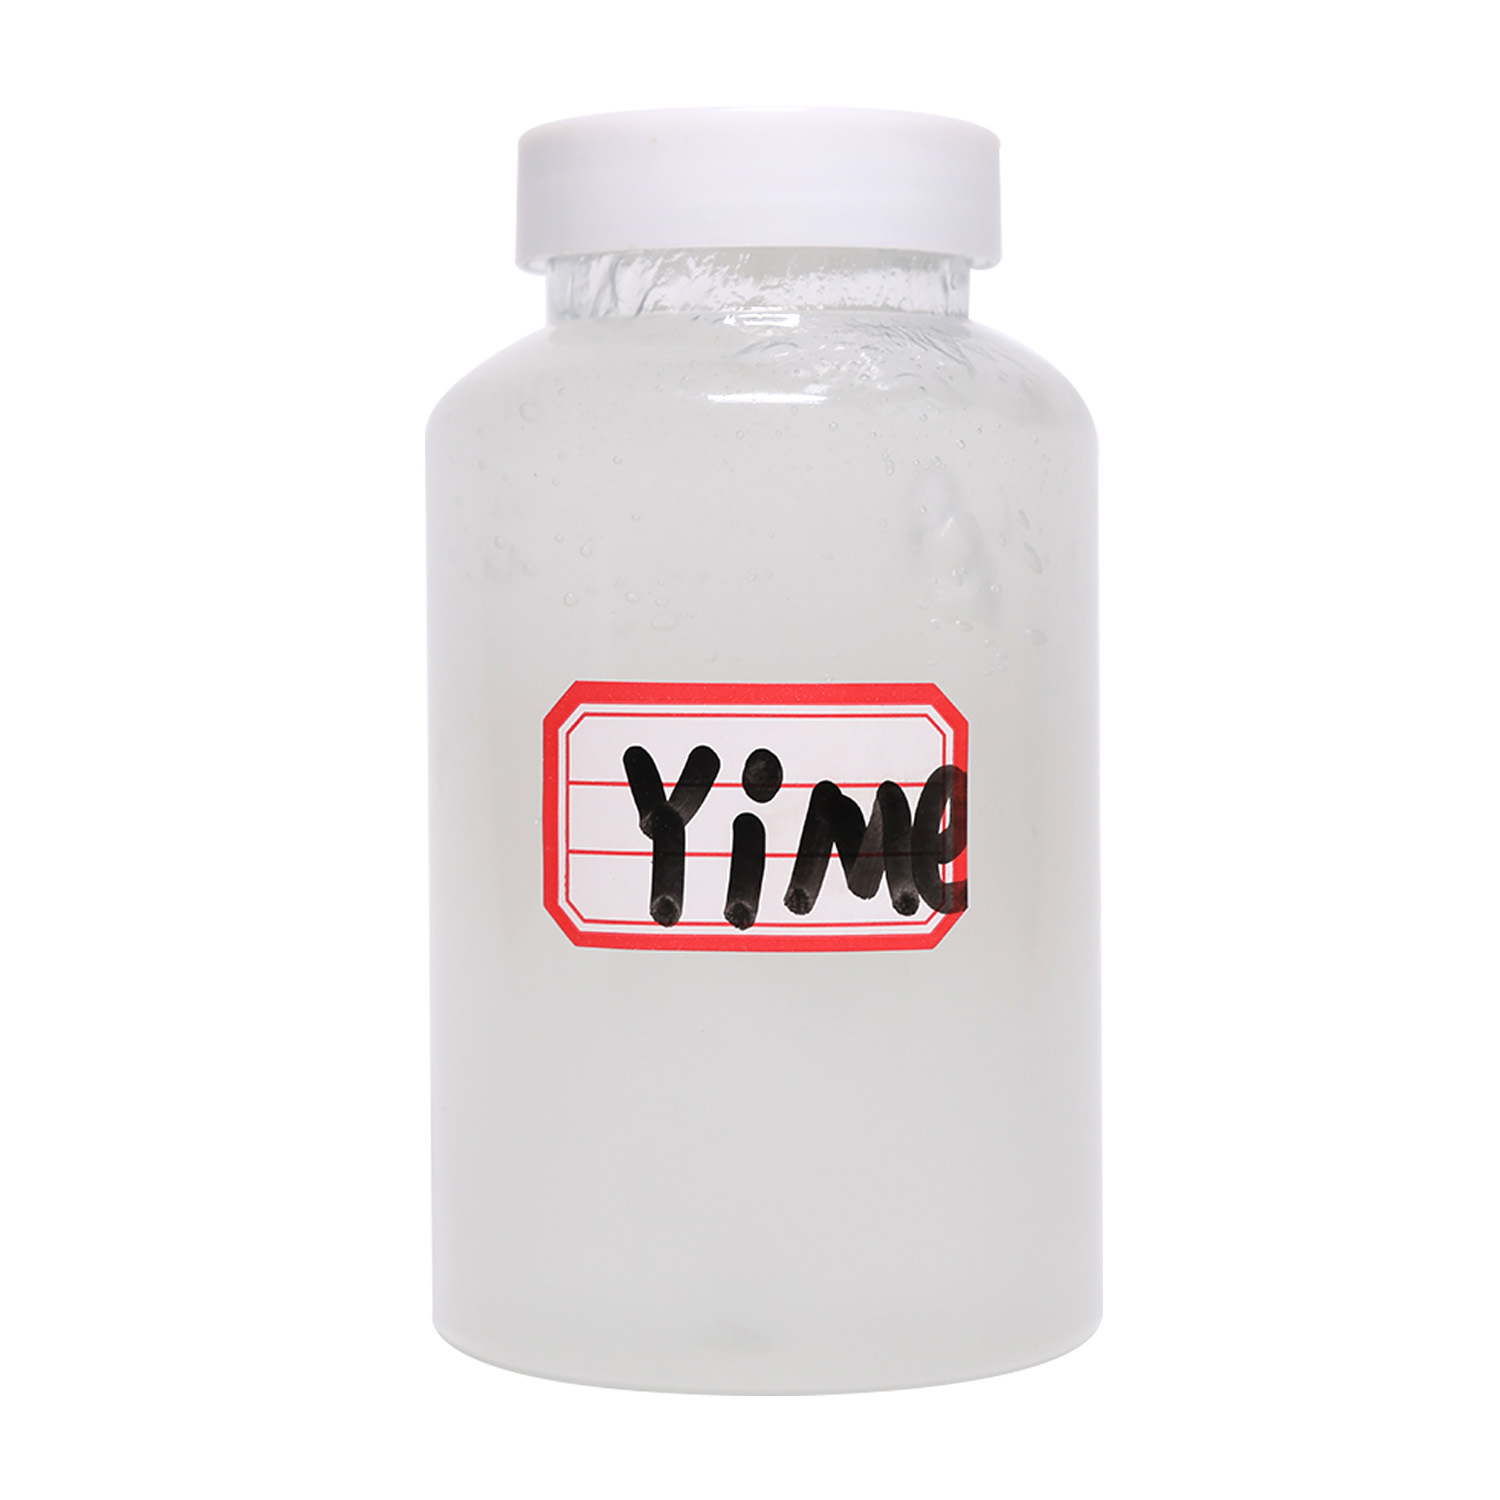 Pharmaceutical Grade Polyethylene Glycol 3350 Peg3350 CAS 25322-68-3